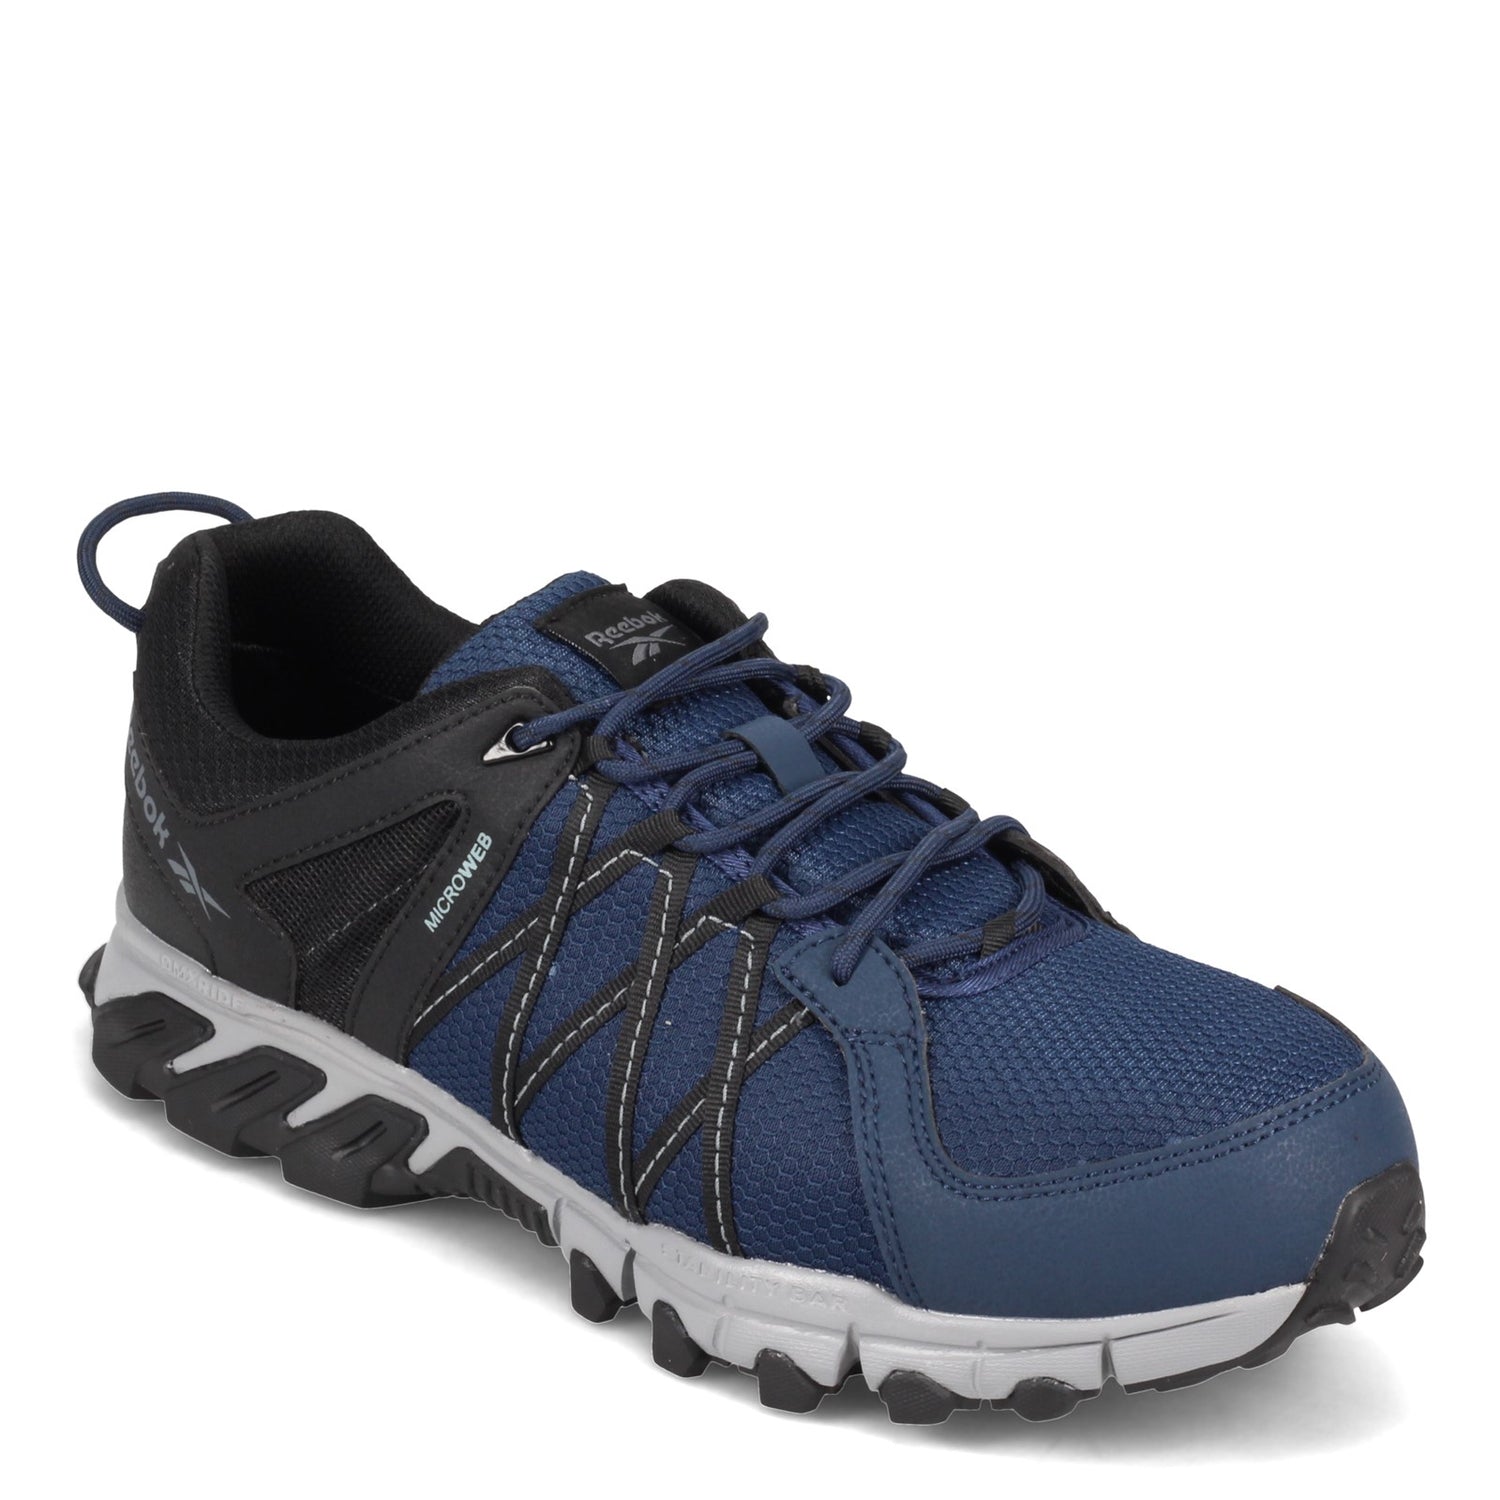 Peltz Shoes  Men's Reebok Work Trail Grip Low Work Shoe Navy/Black/Grey RB3403